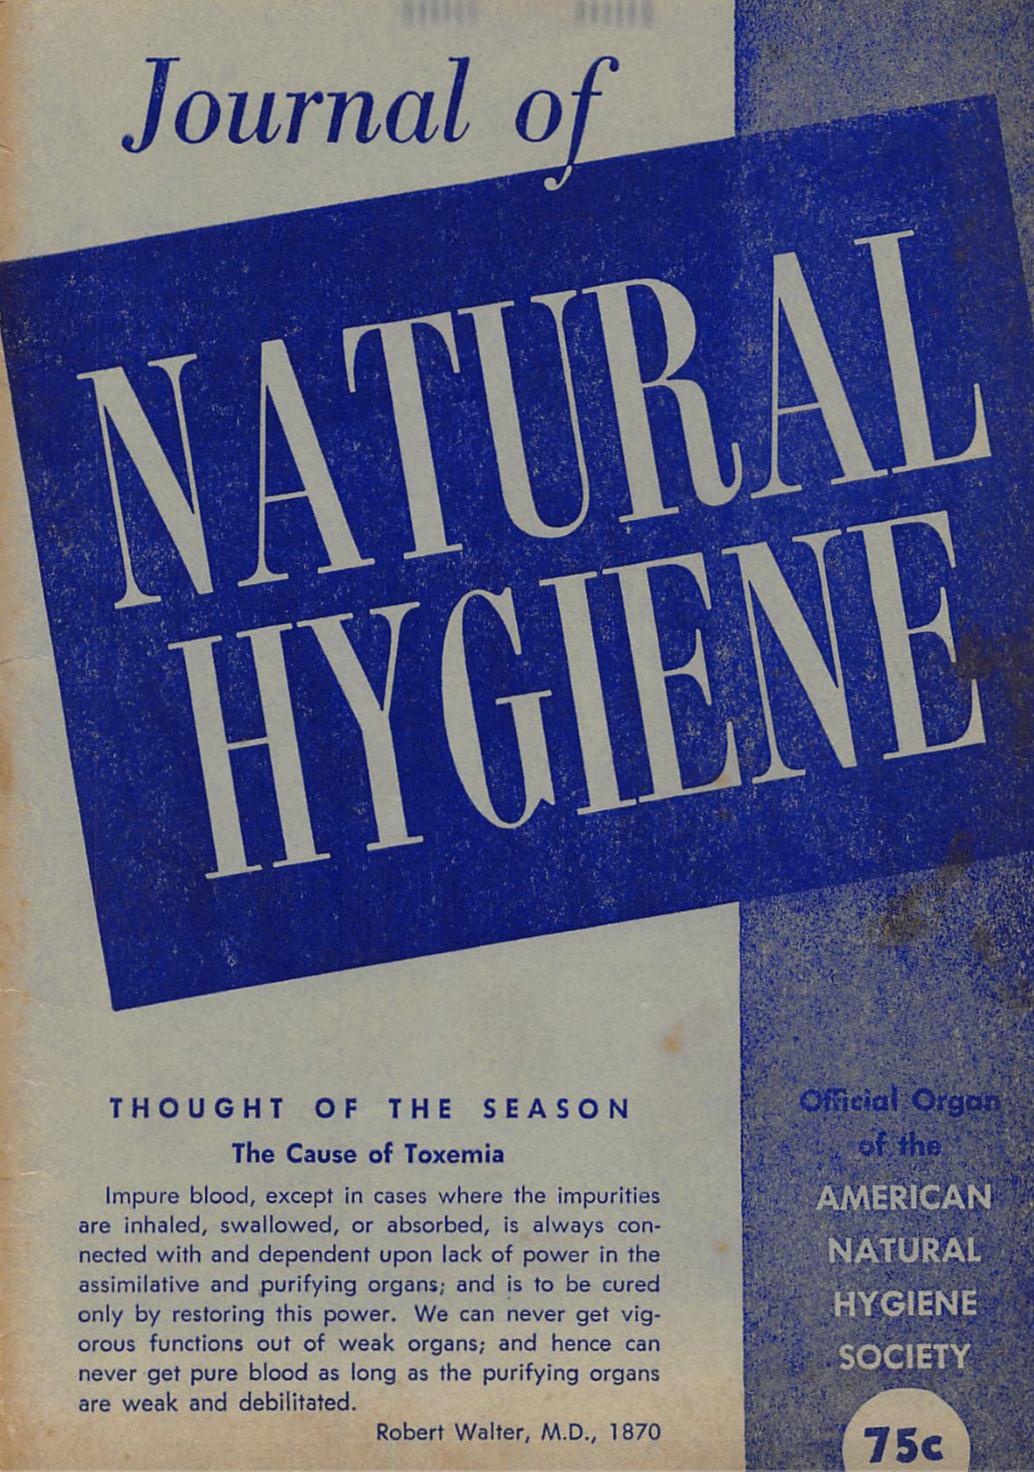 Journal of Natural Hygiene Winter 1956